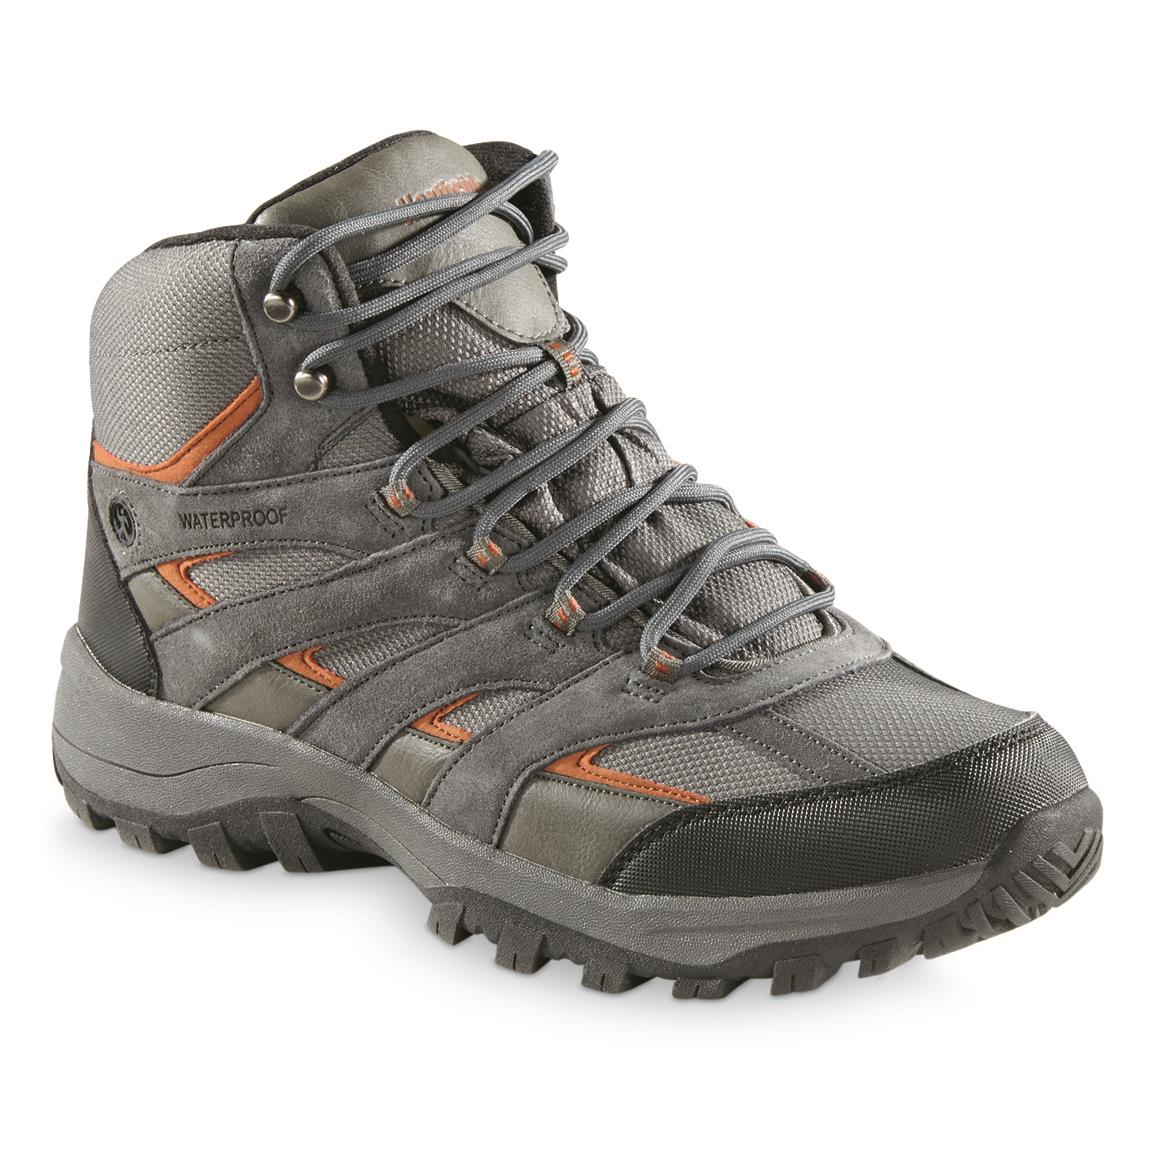 Northside Men's Gresham Waterproof Hiking Boots, Charcoal/orange